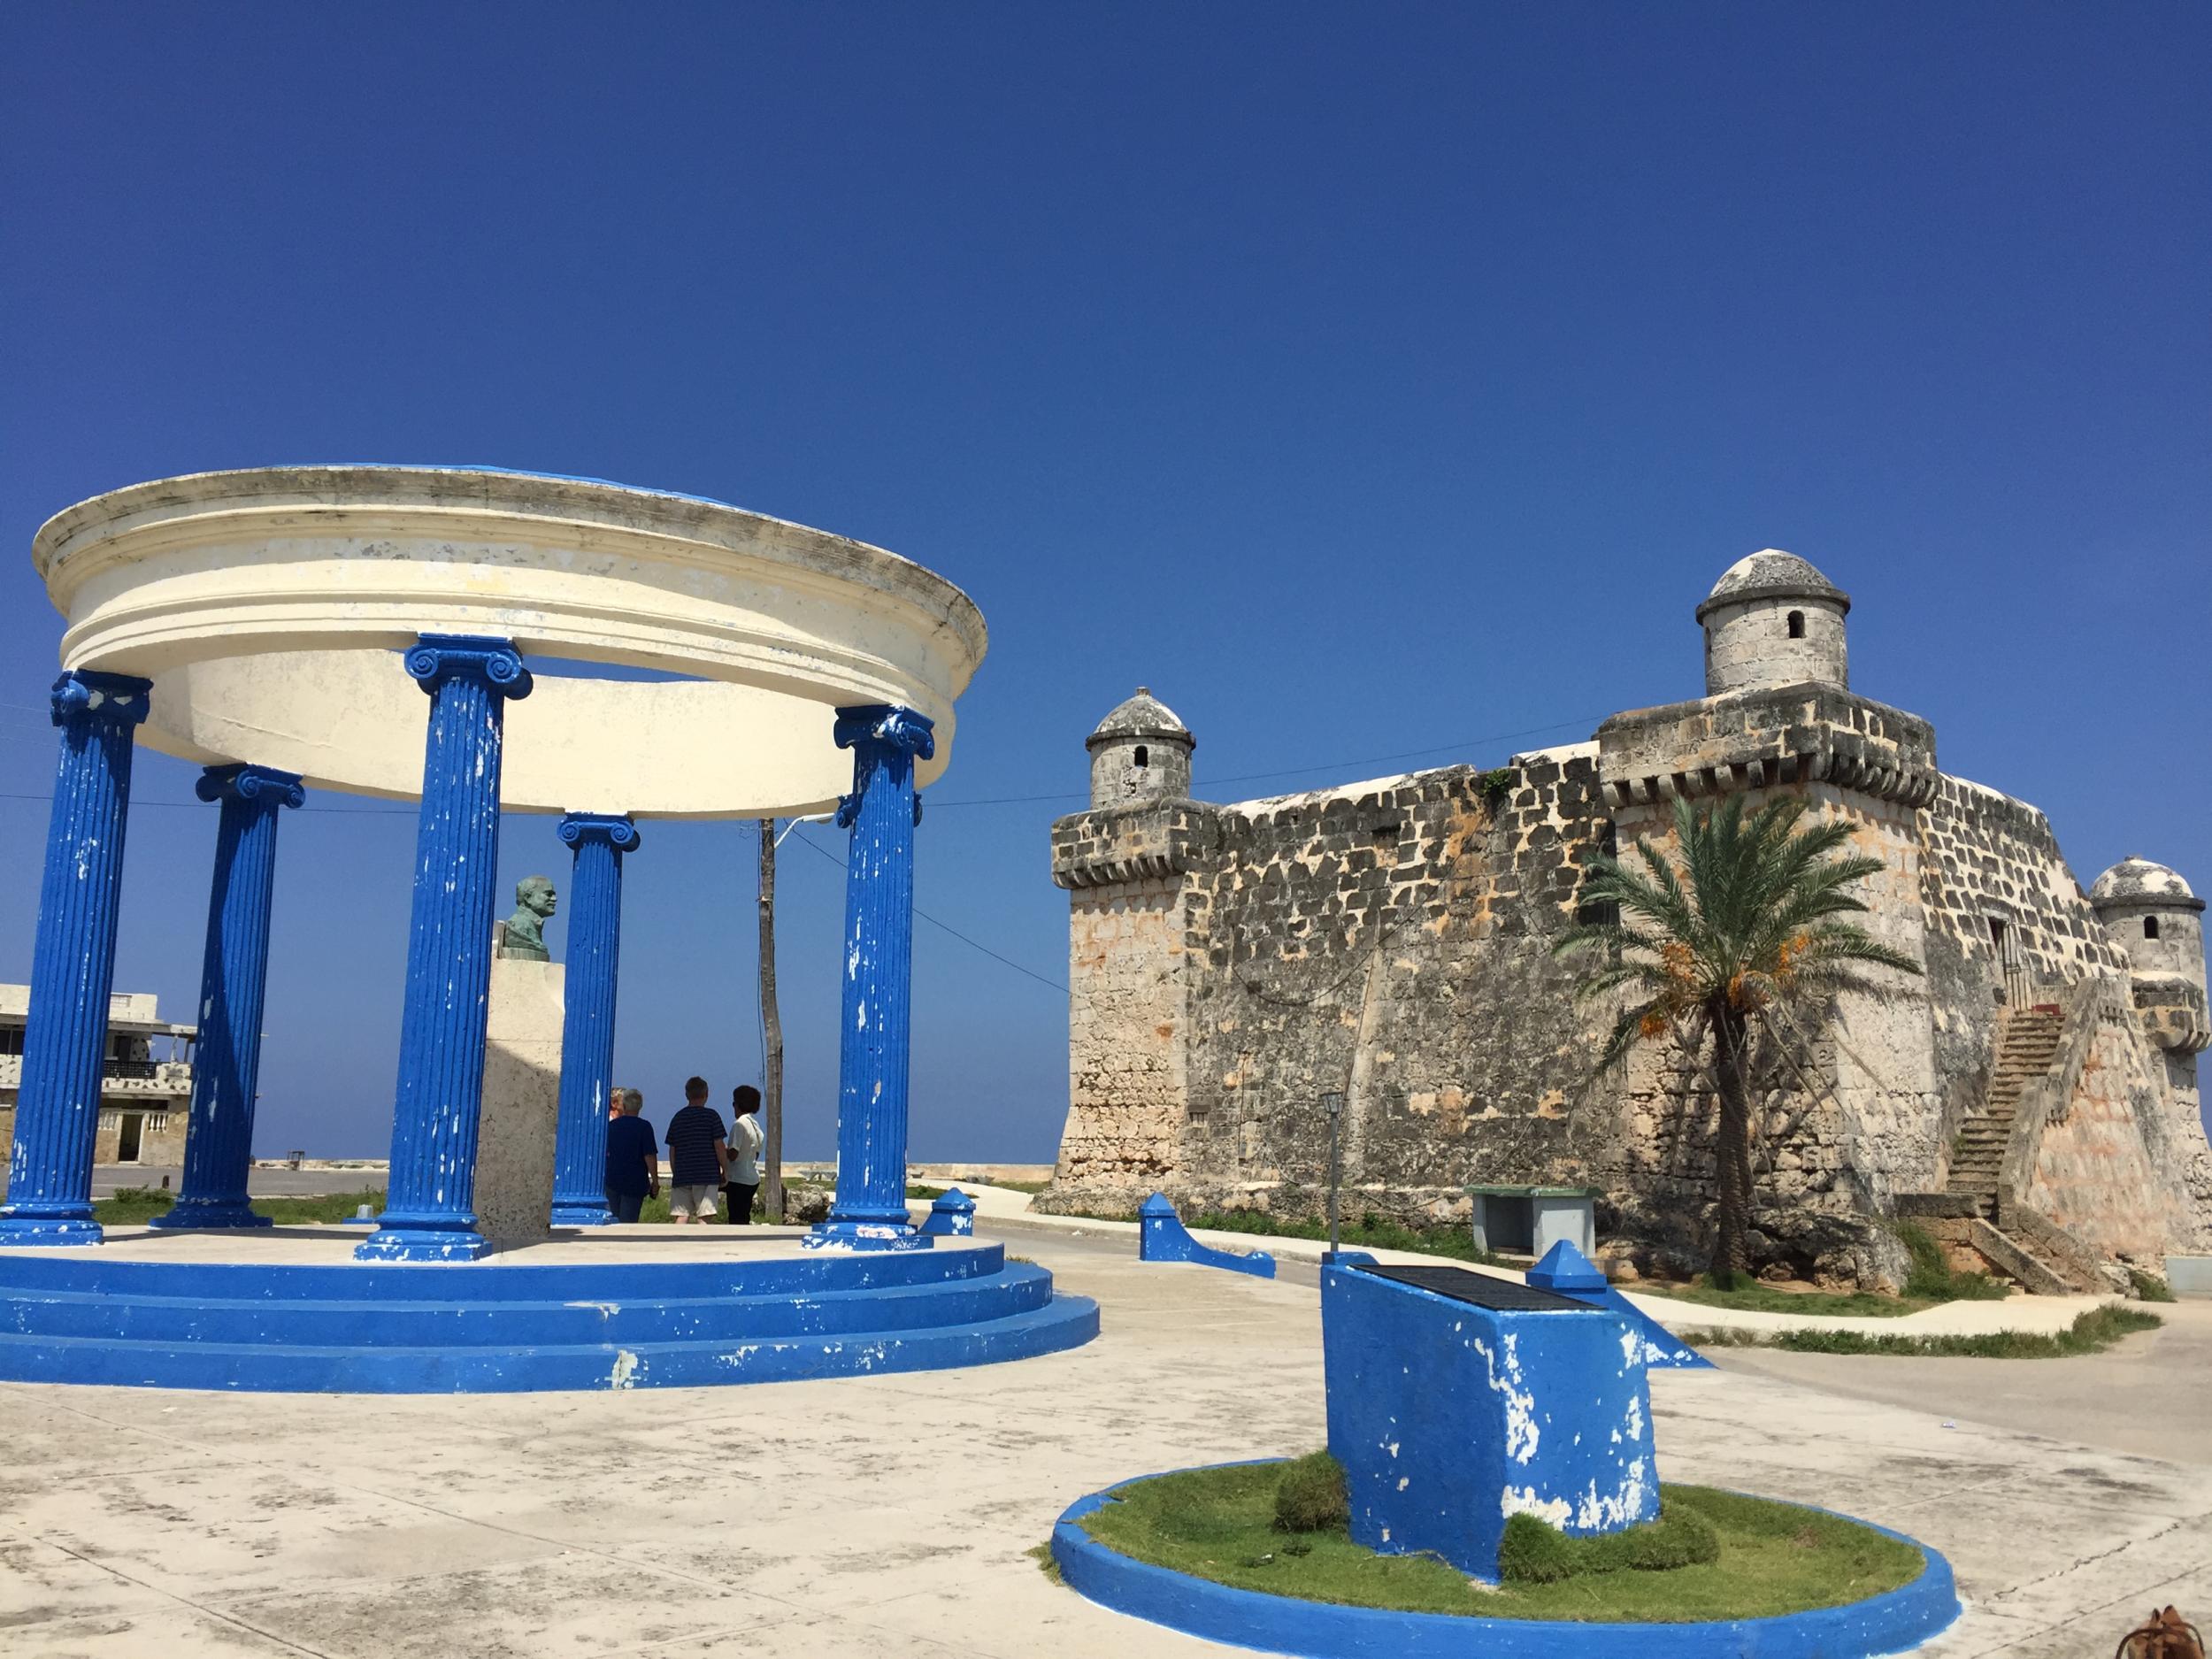 A Hemingway monument shelters under a blue pavilion